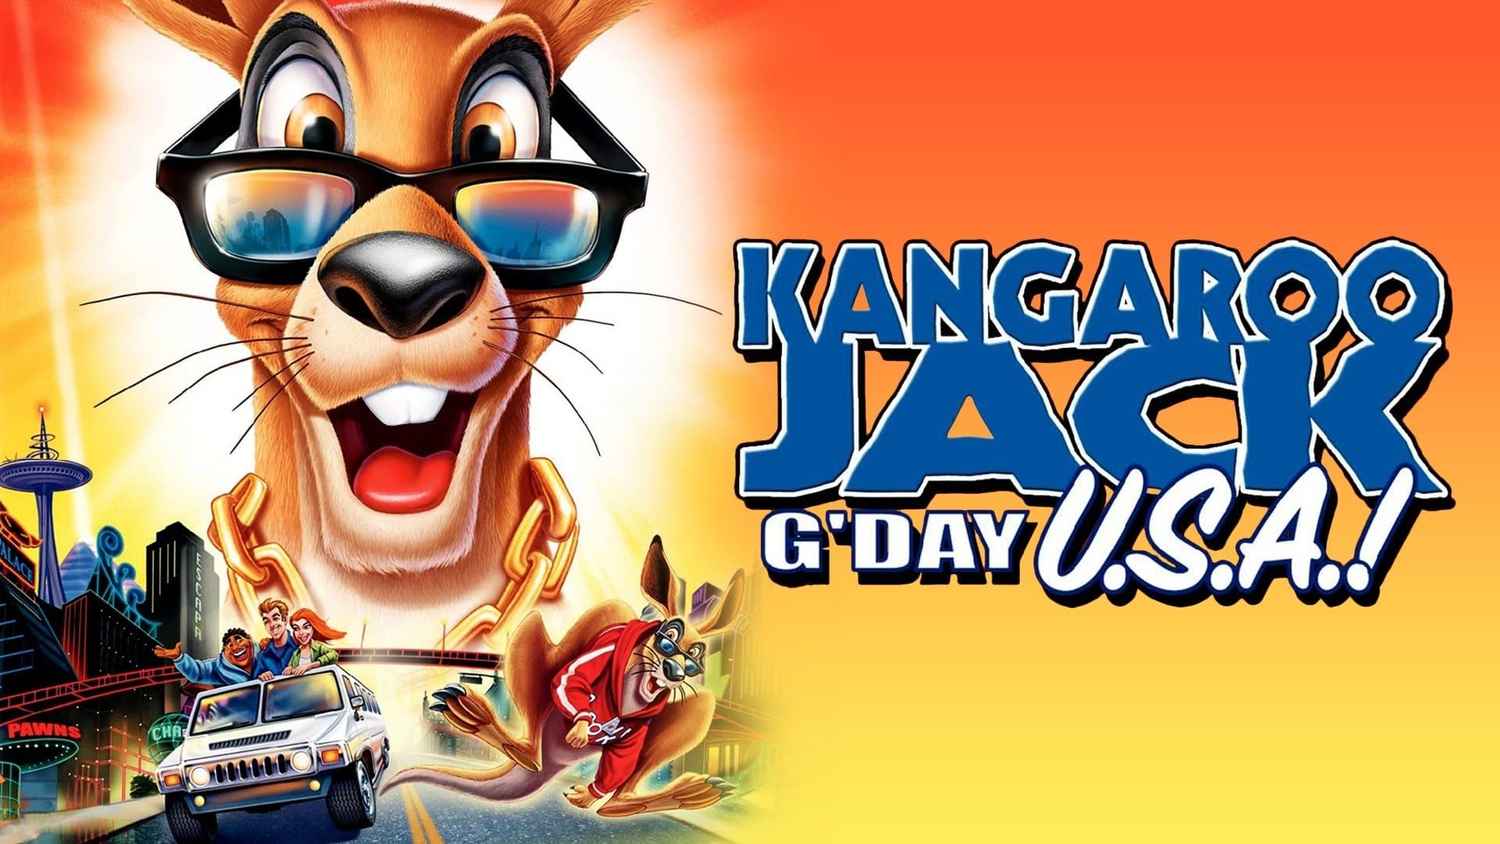 Kangaroo Jack: G'Day, U.S.A.!